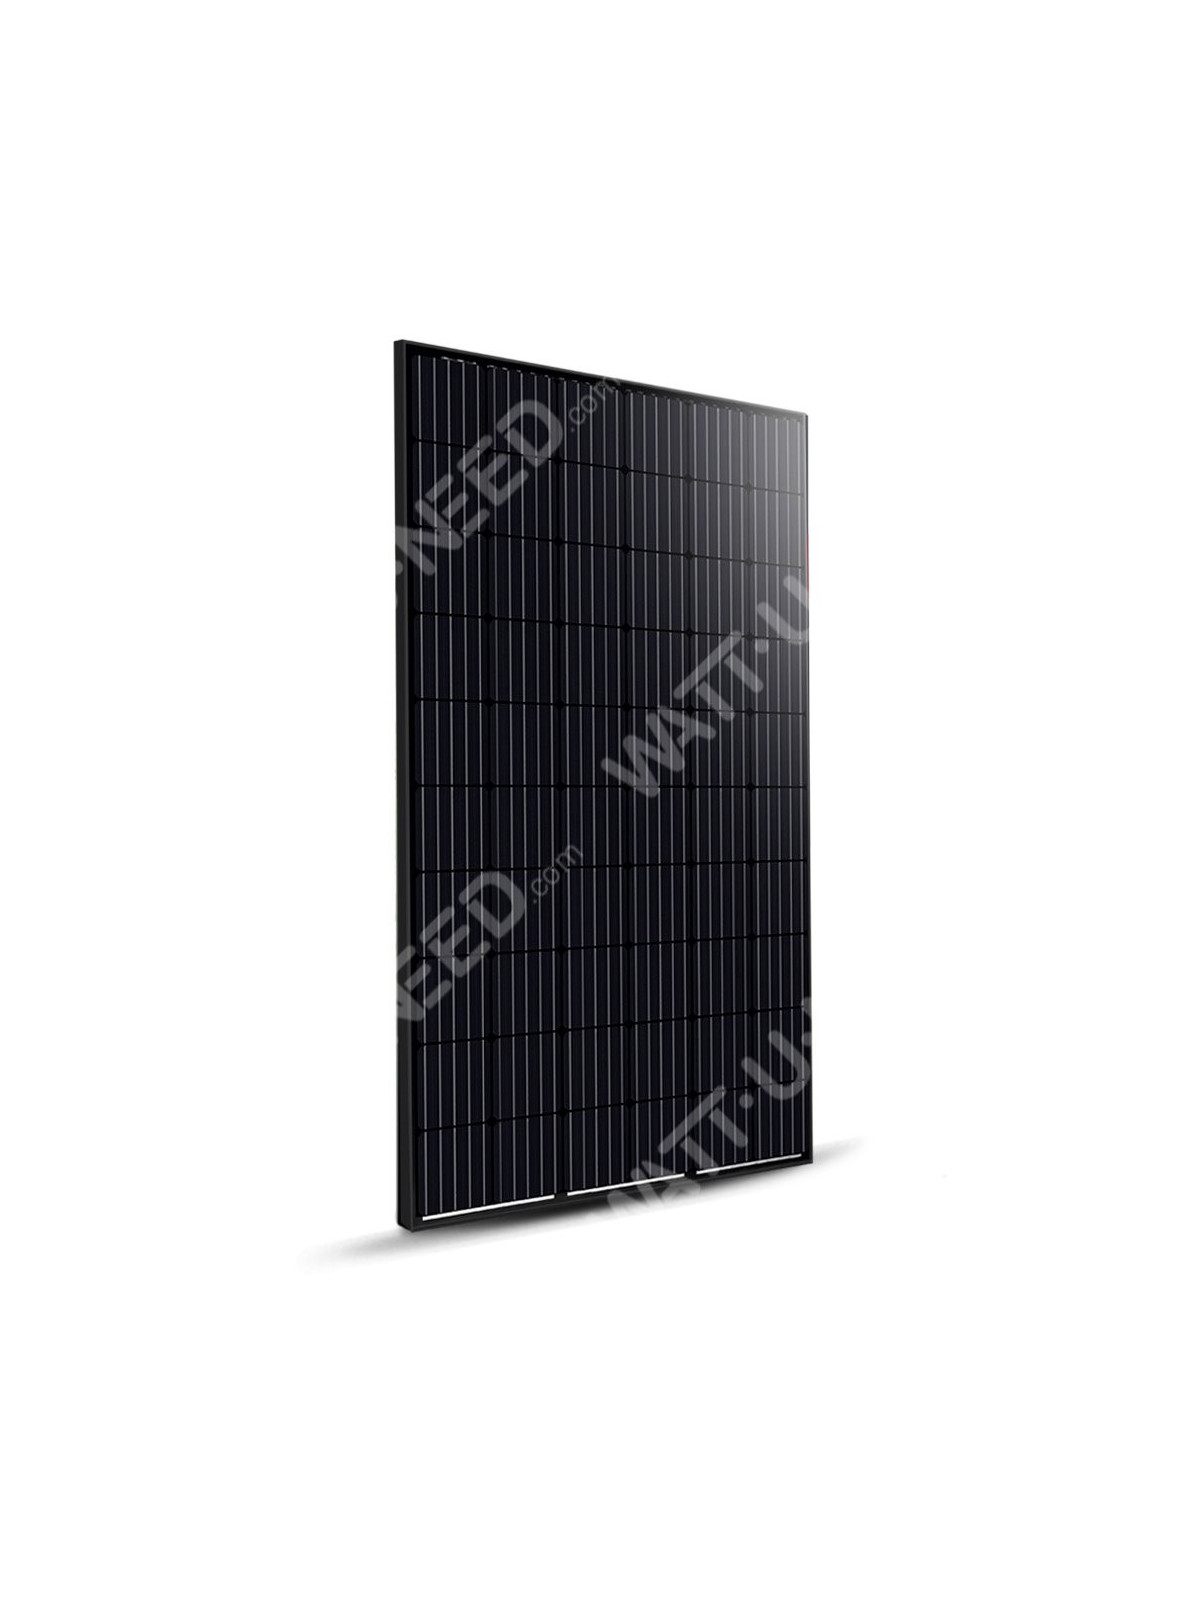 Kit fotovoltaico autónomo de clase 2